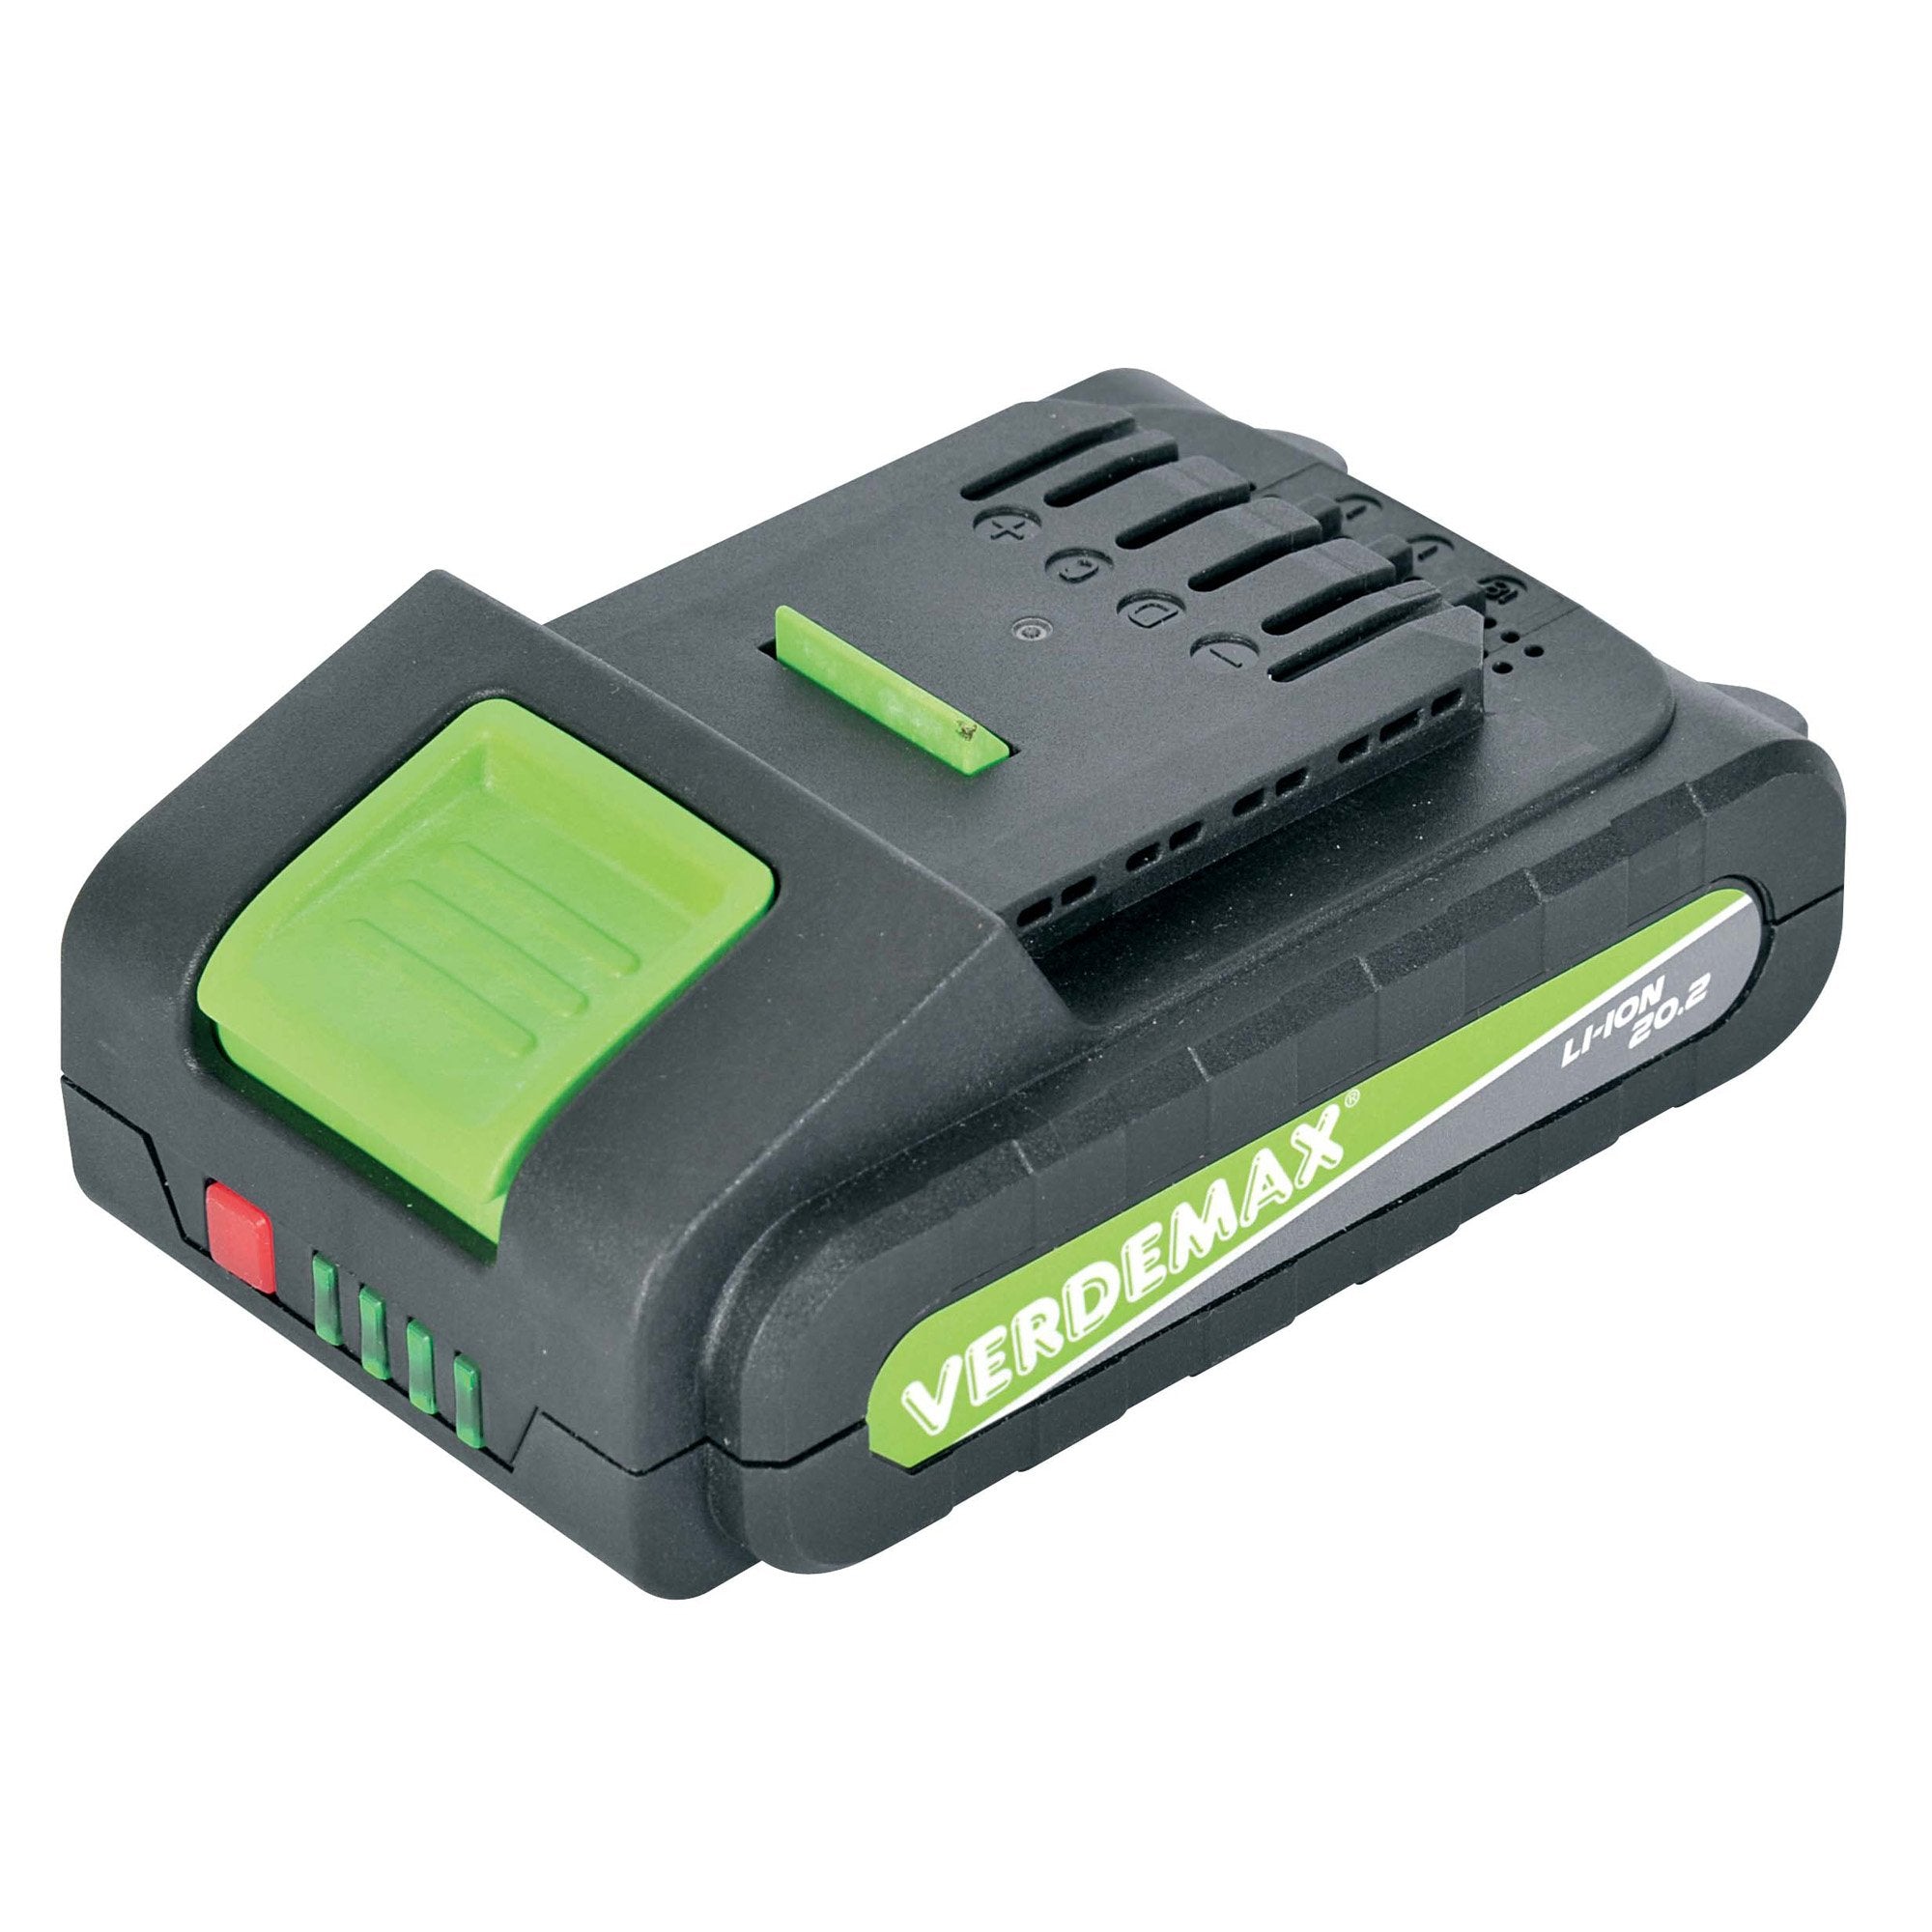 verdemax-batteria-ricambio-20v-2-5ah-art-4356-attrezzi